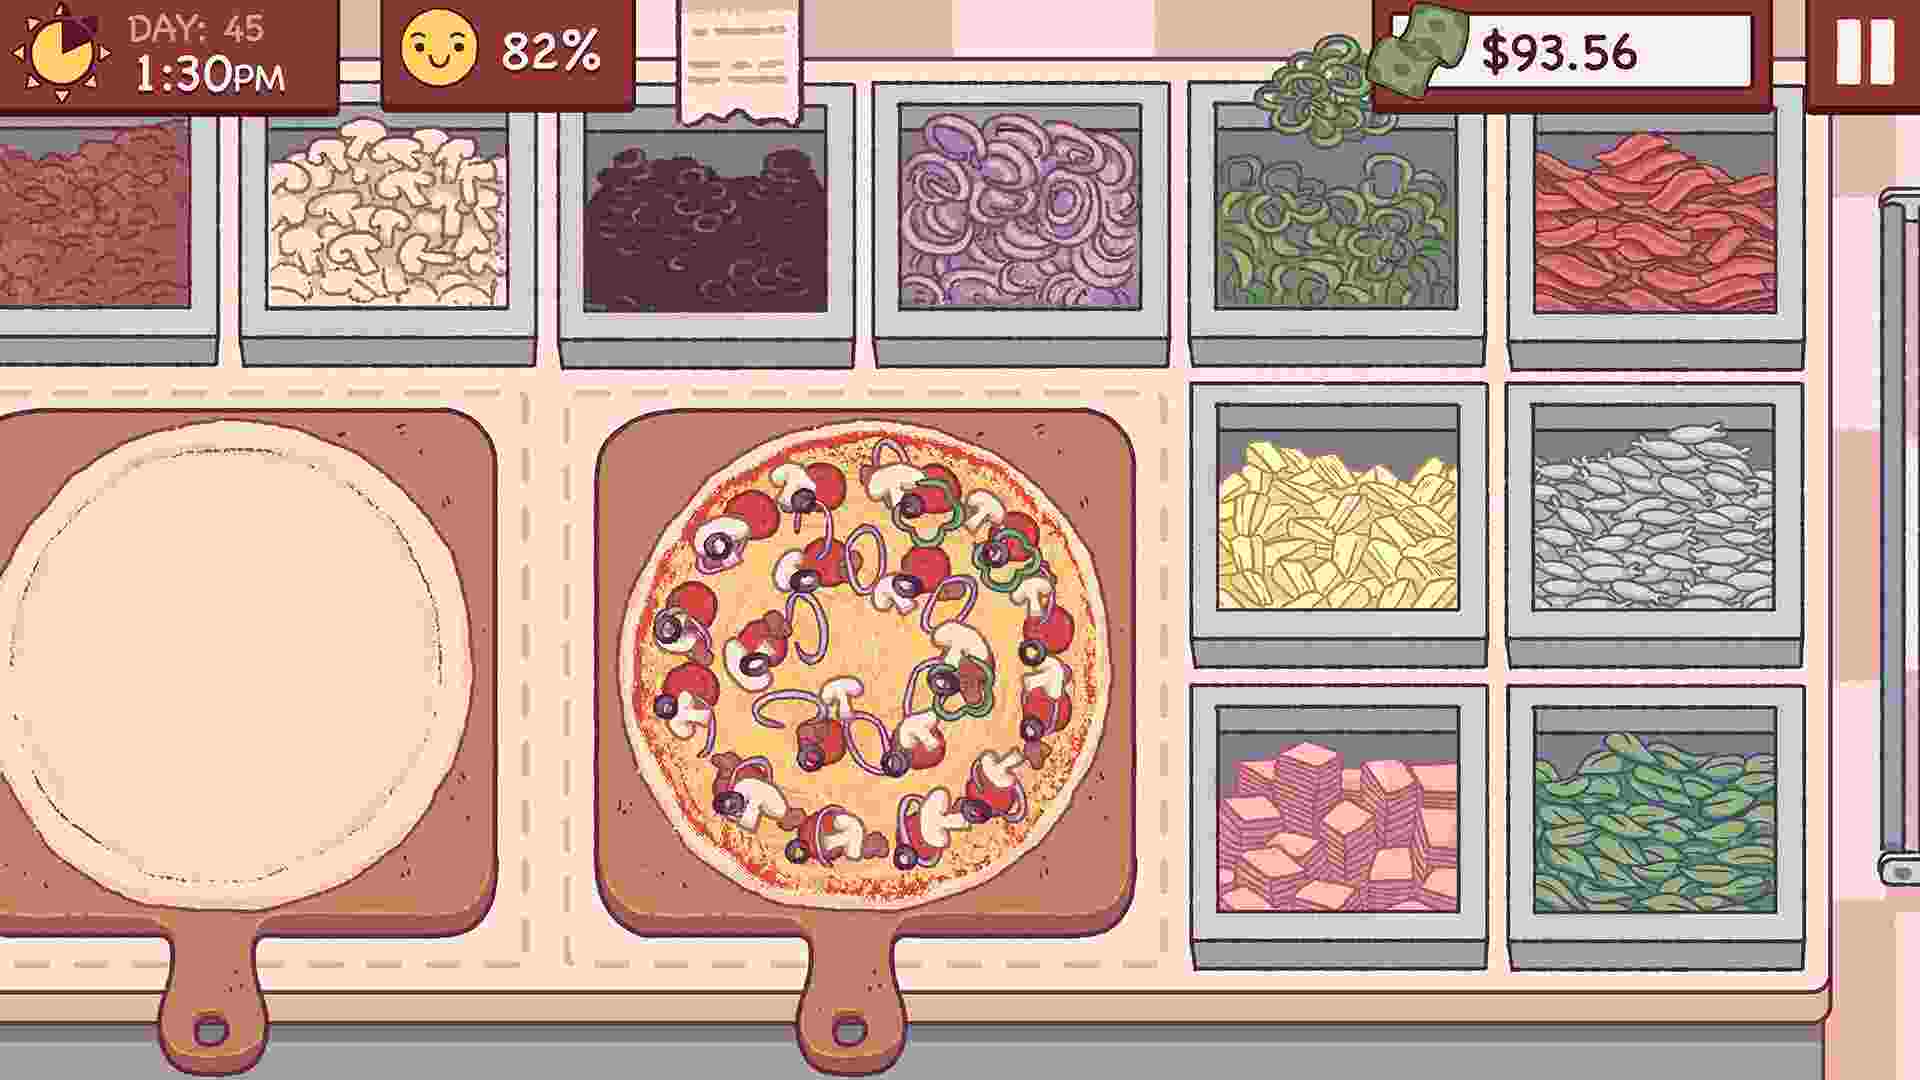 Good Pizza Great Pizza v1.8.1 MOD APK - PARA HİLELİ